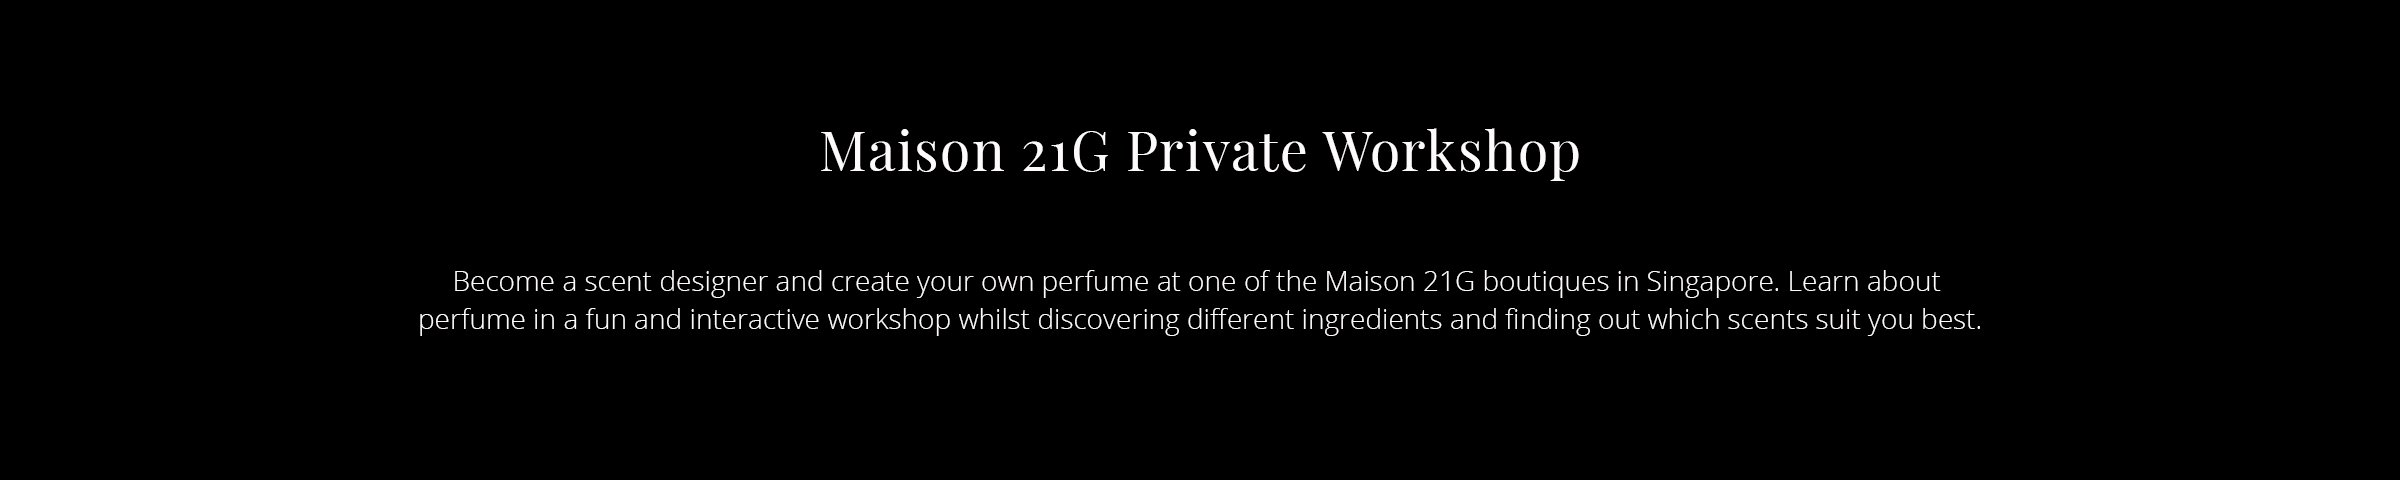 Maison 21G - Private Workshop